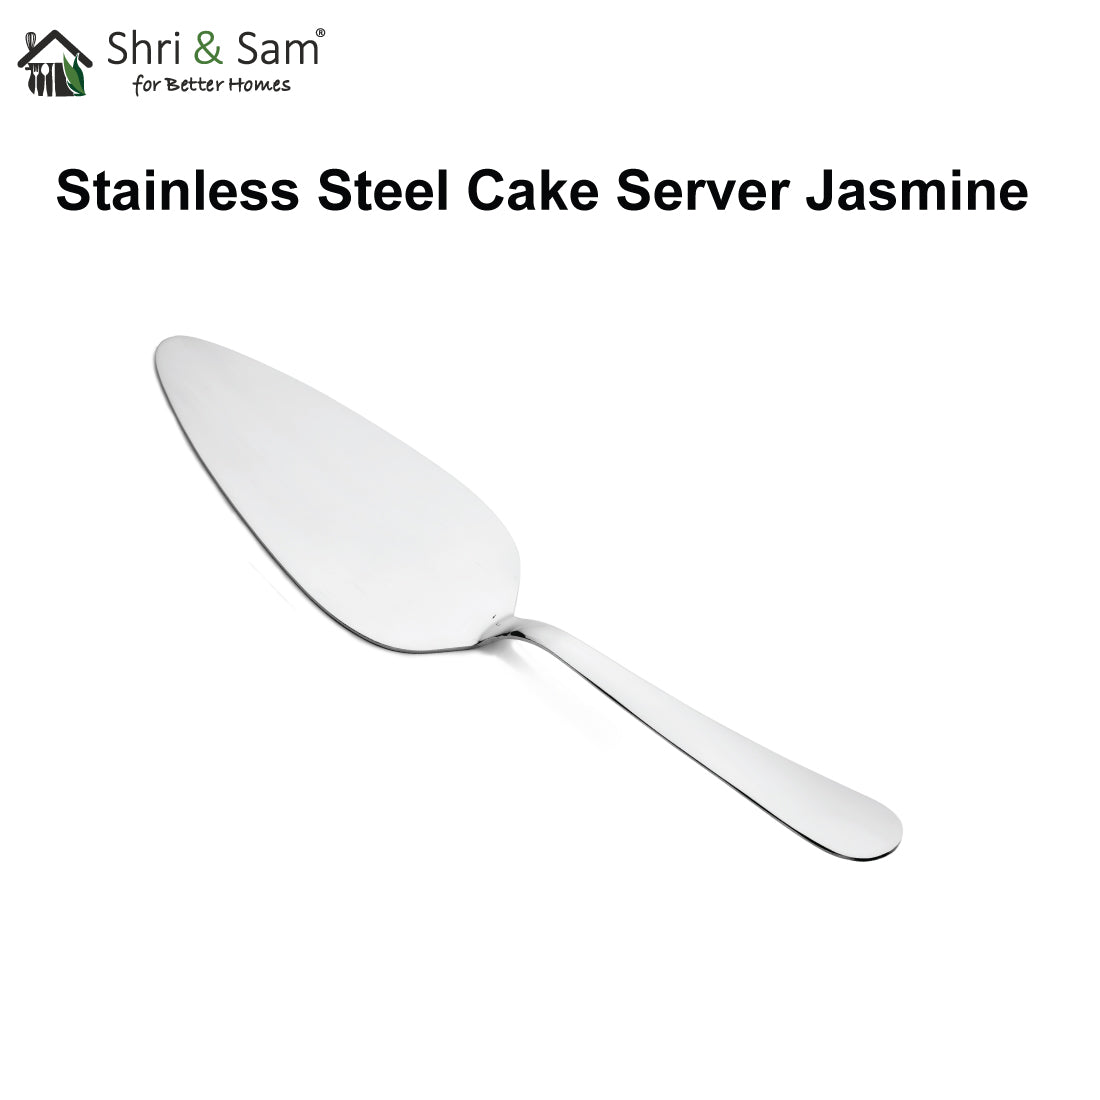 Stainless Steel Cake Server Jasmine